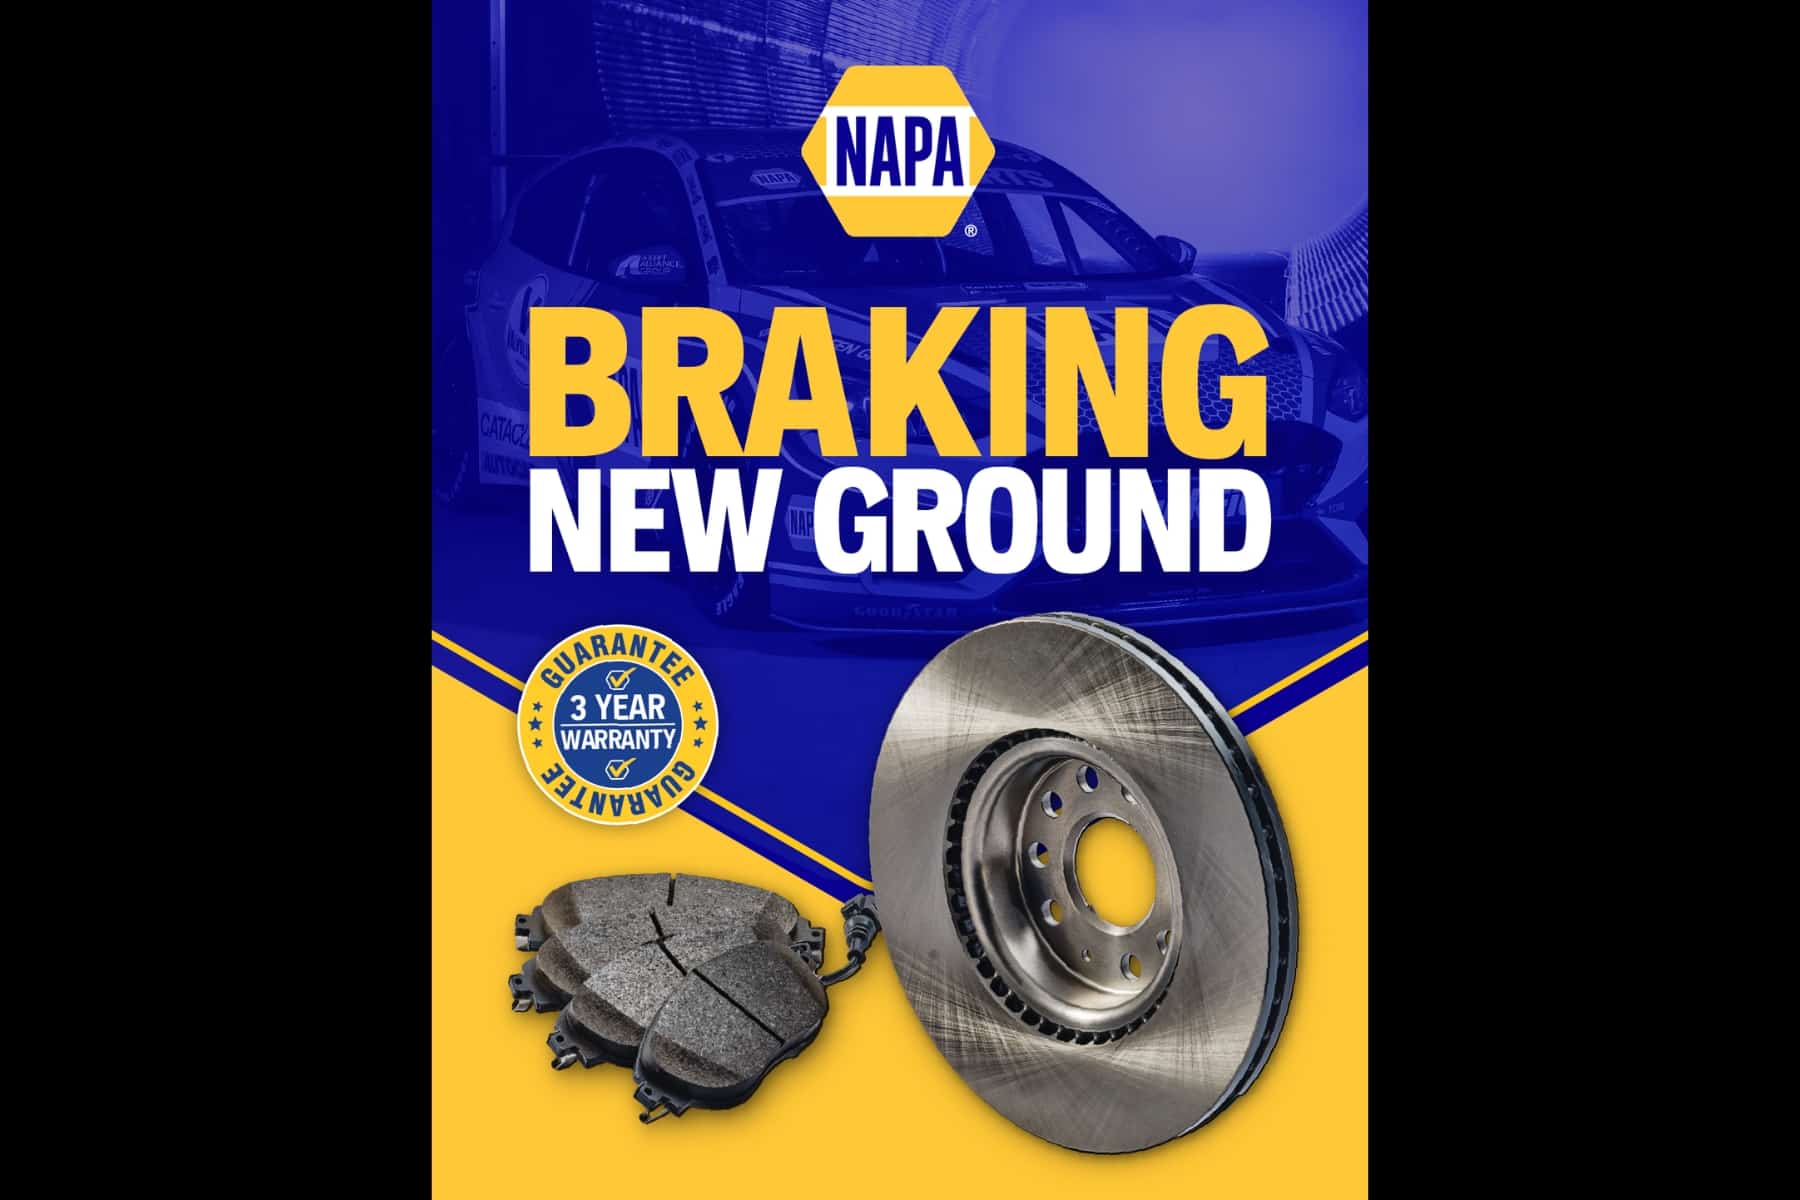 NAPA U.K. is launching a new braking range